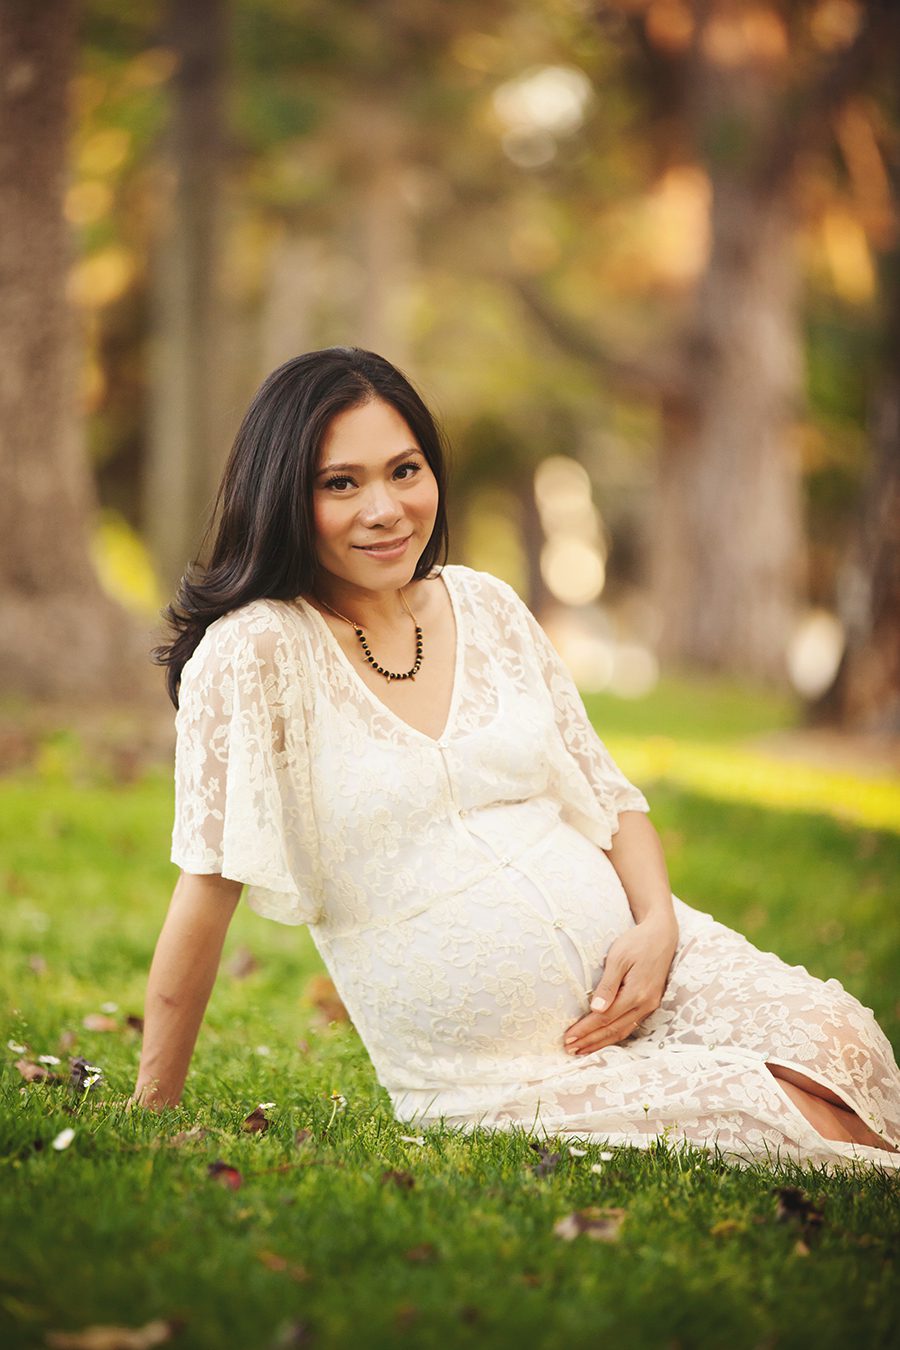 Orange County Maternity Photographer 12